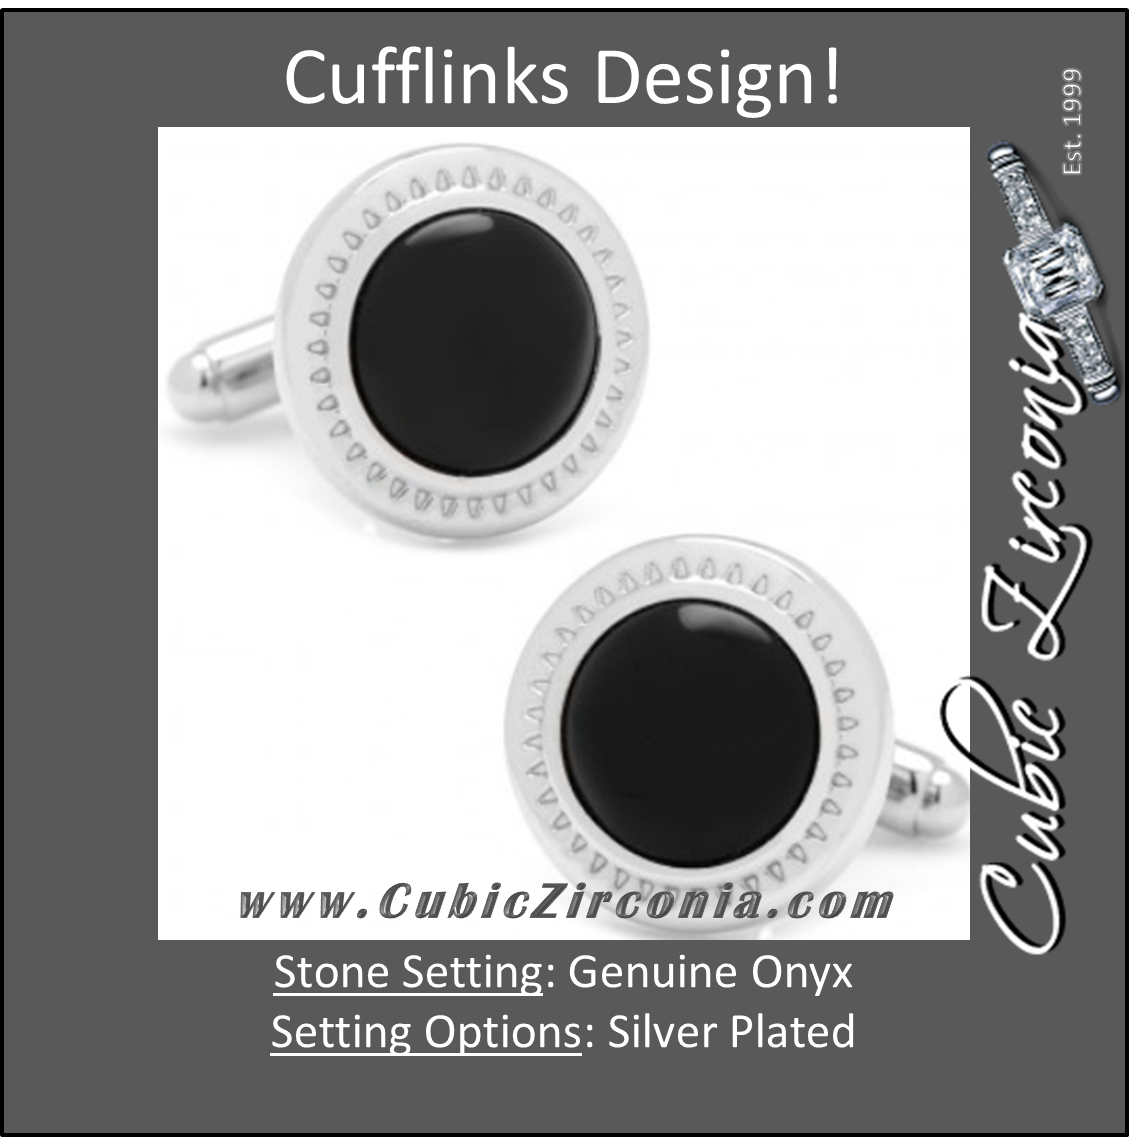 Men’s Cufflinks- Genuine Black Onyx with Etched Circular Border